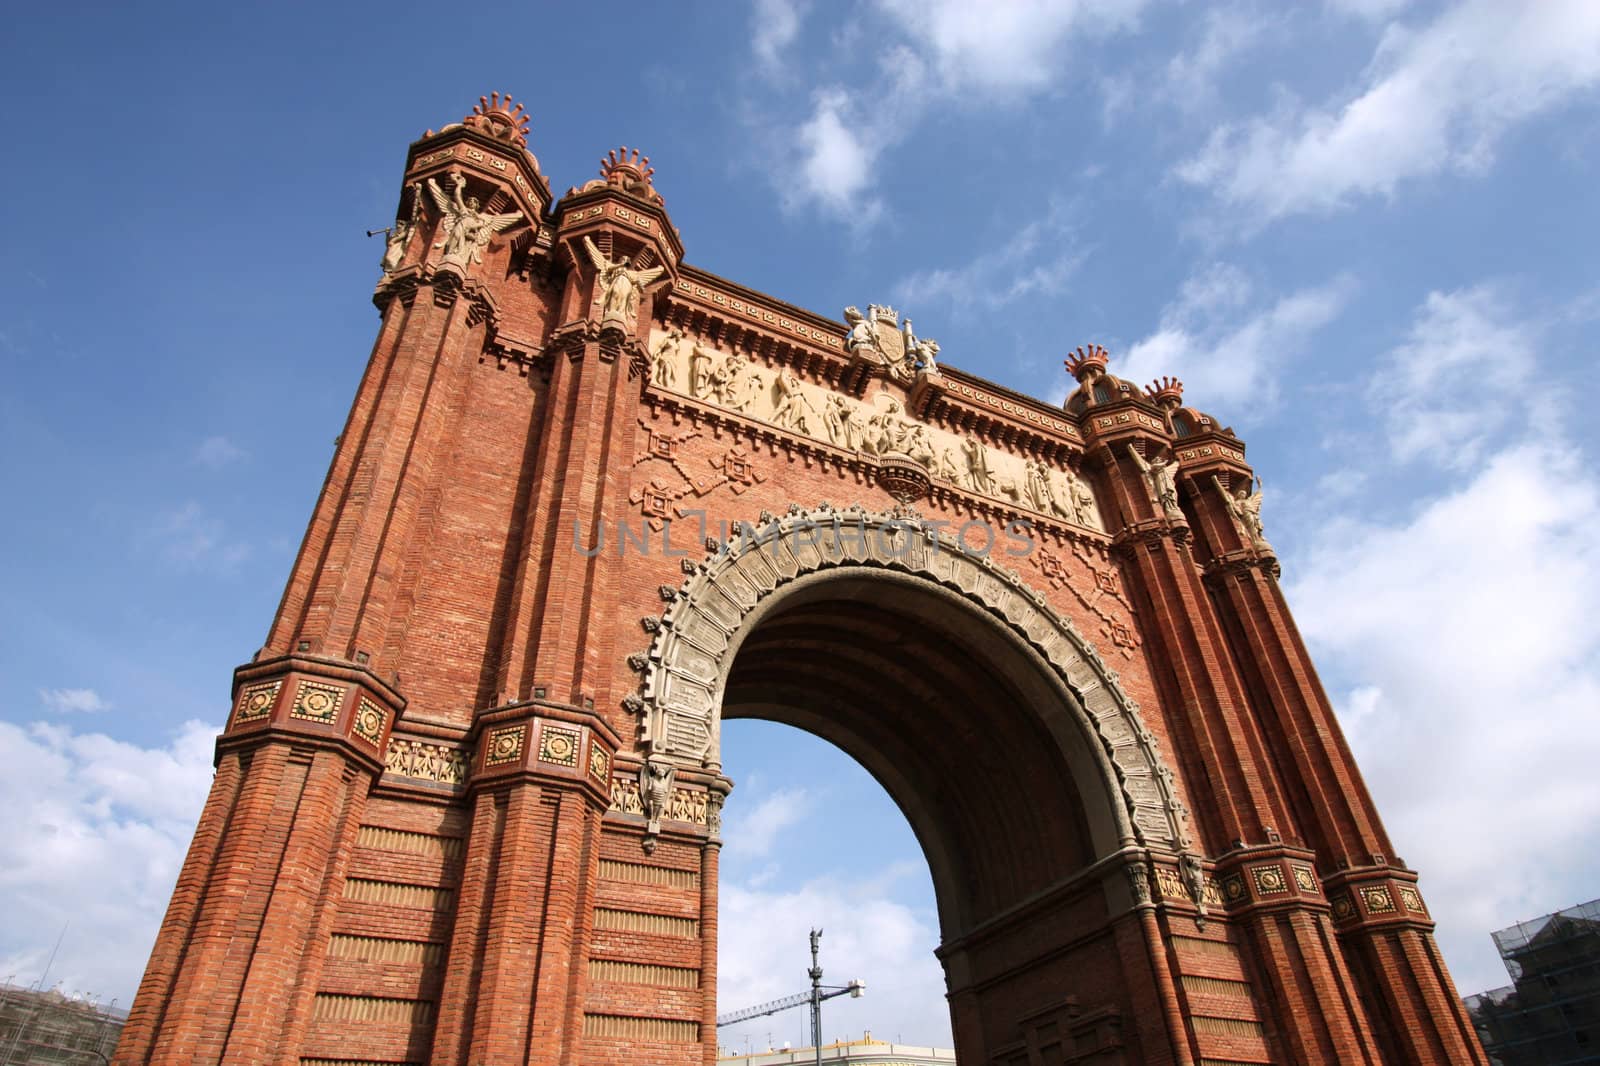 The Arc de Triomf (English: Triumphal Arch) - archway structure in Barcelona, Spain. Built by architect Josep Vilaseca i Casanovas. Moorish revival style.